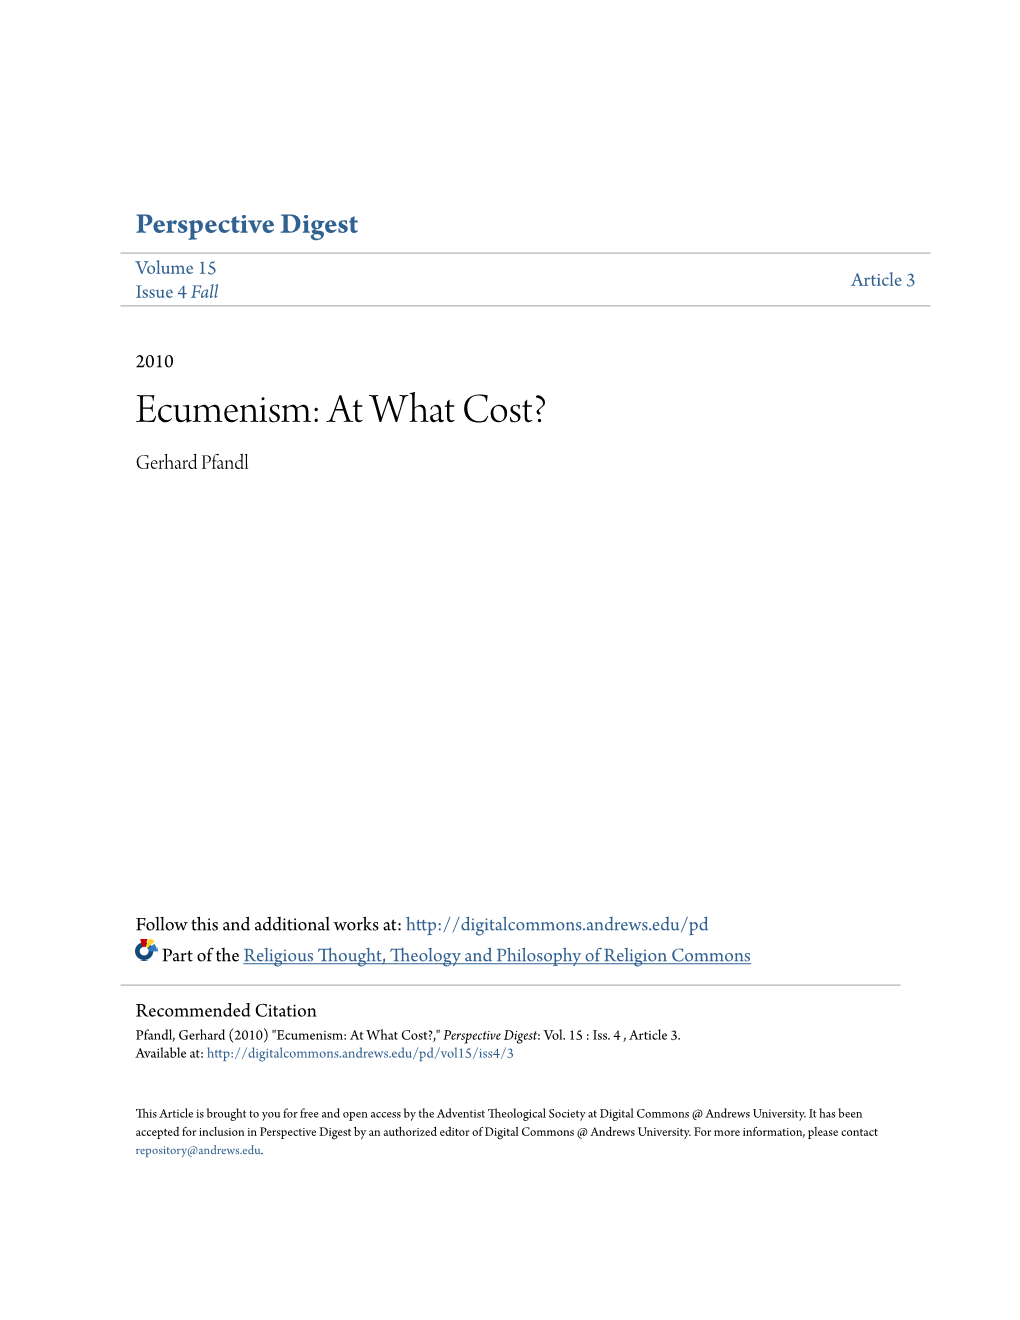 Ecumenism: at What Cost? Gerhard Pfandl